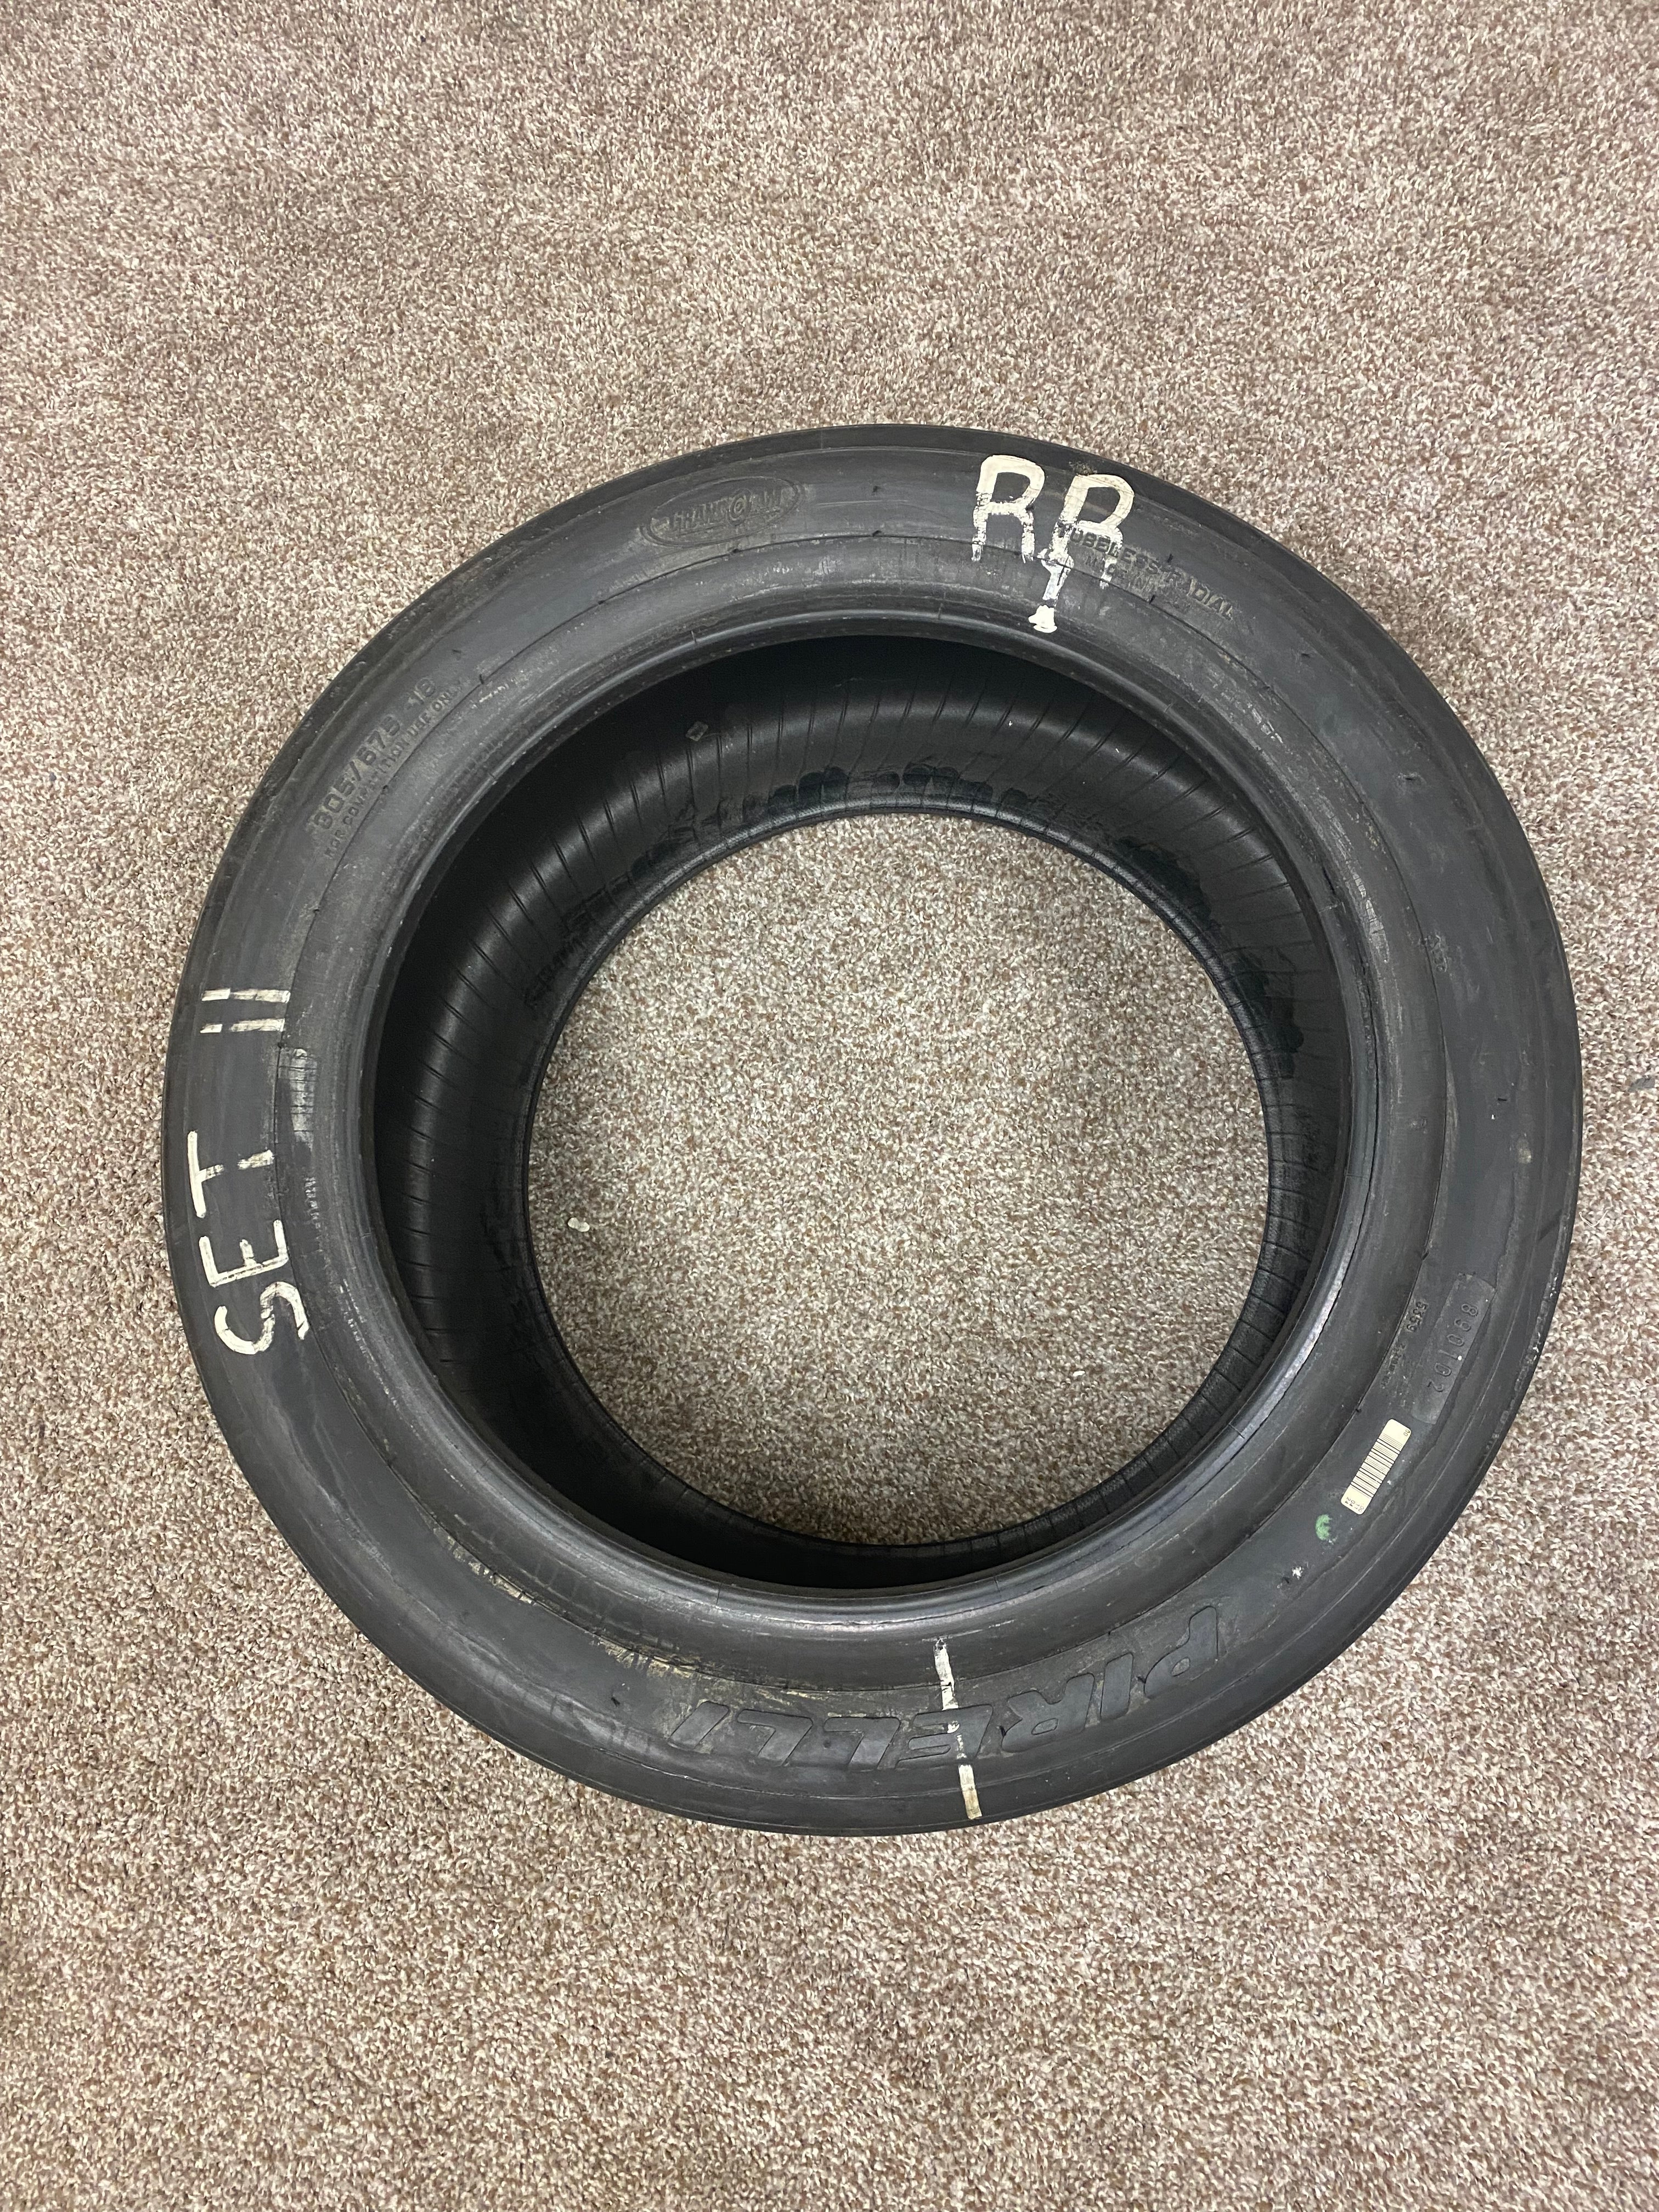 Pirelli Grand Am 305/675/18 Rear Racing Slick Tires